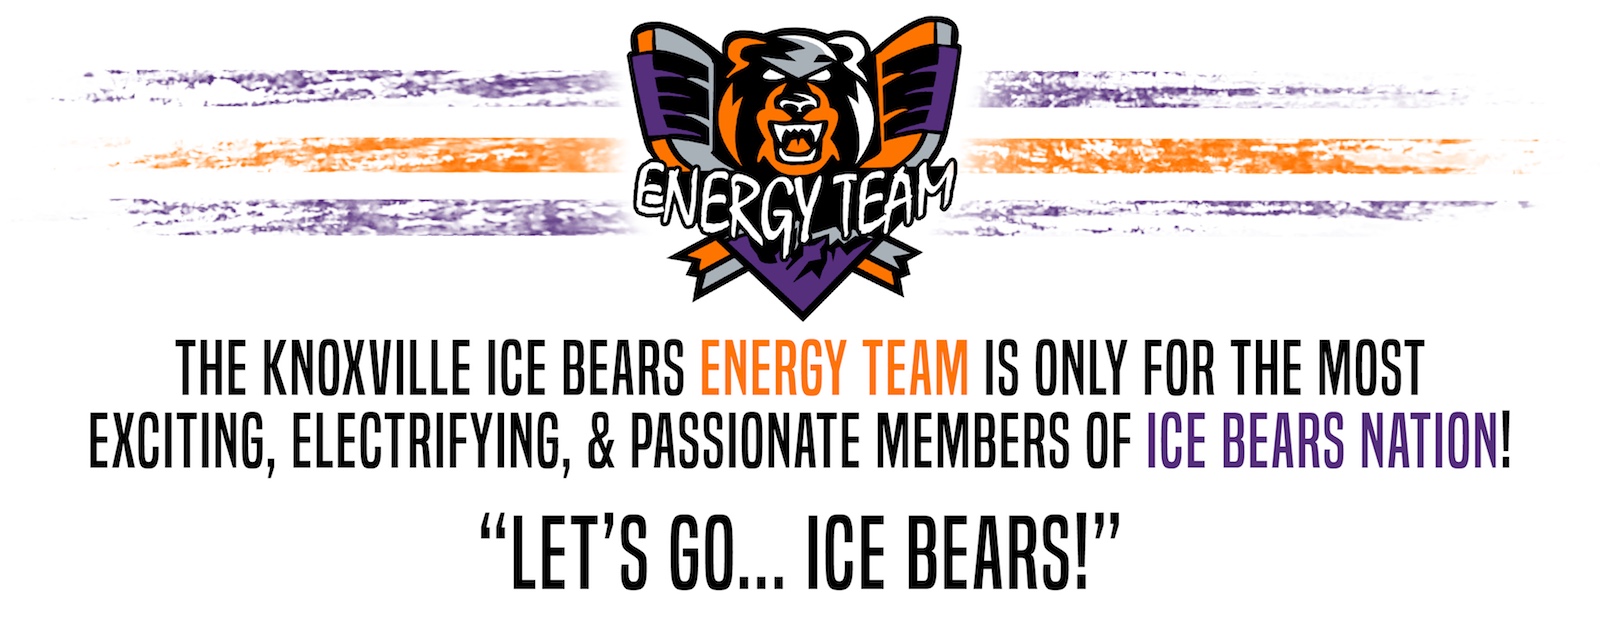 Energy-Team-Knoxville-Ice-Bears